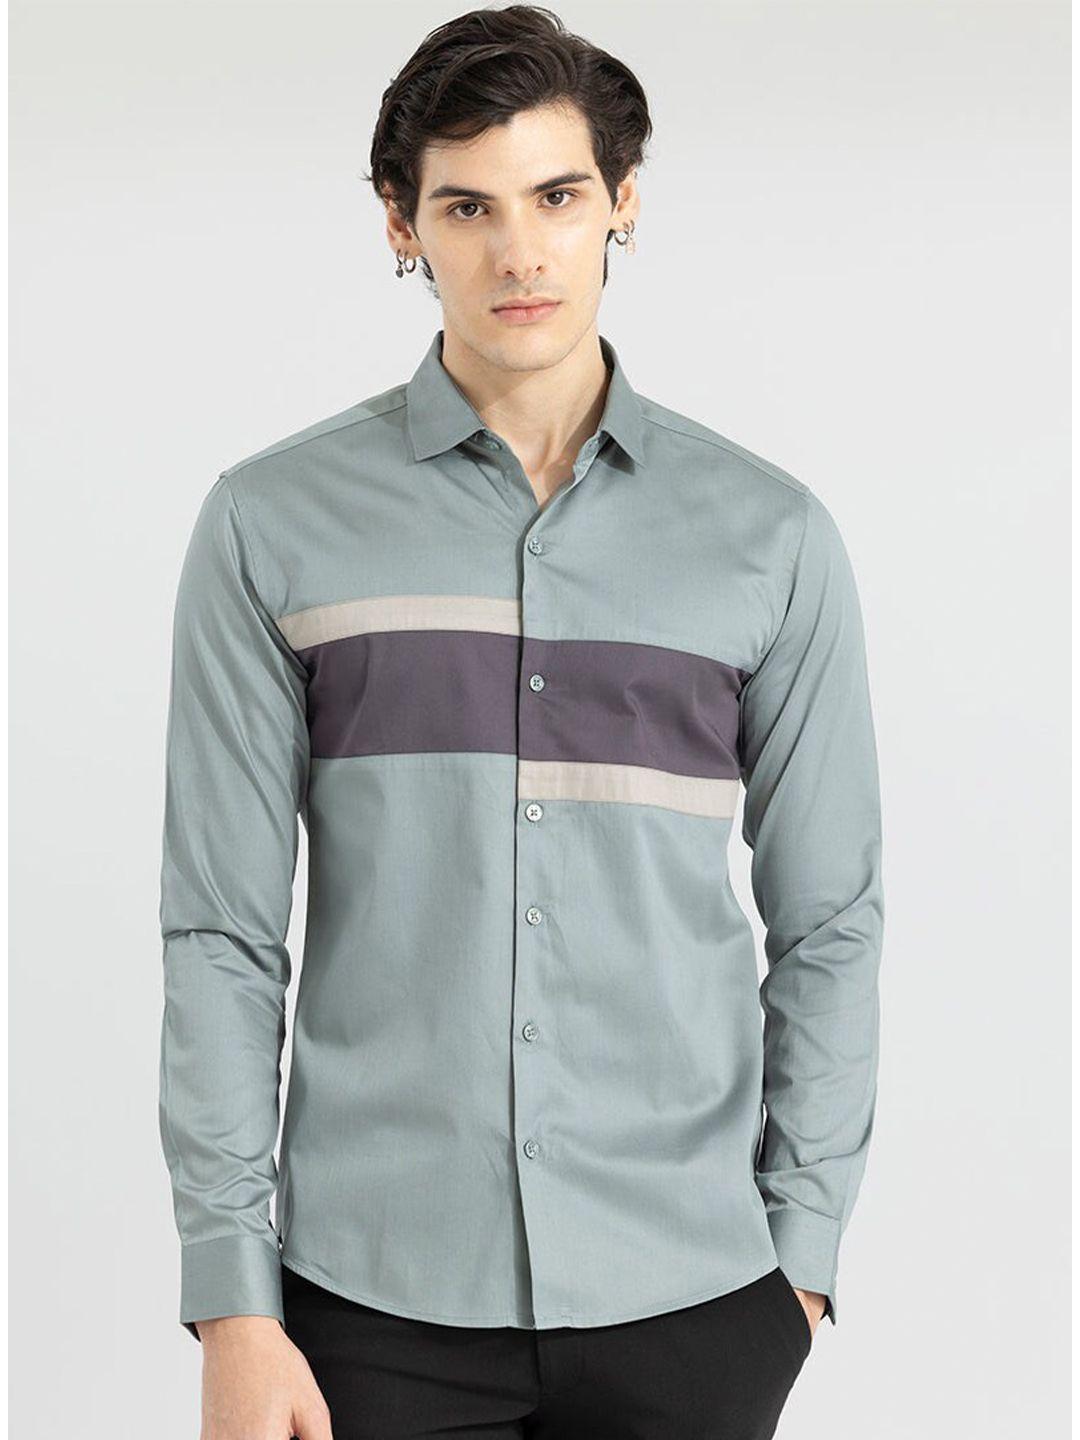 snitch-classic-slim-fit-colourblocked-pure-cotton-casual-shirt